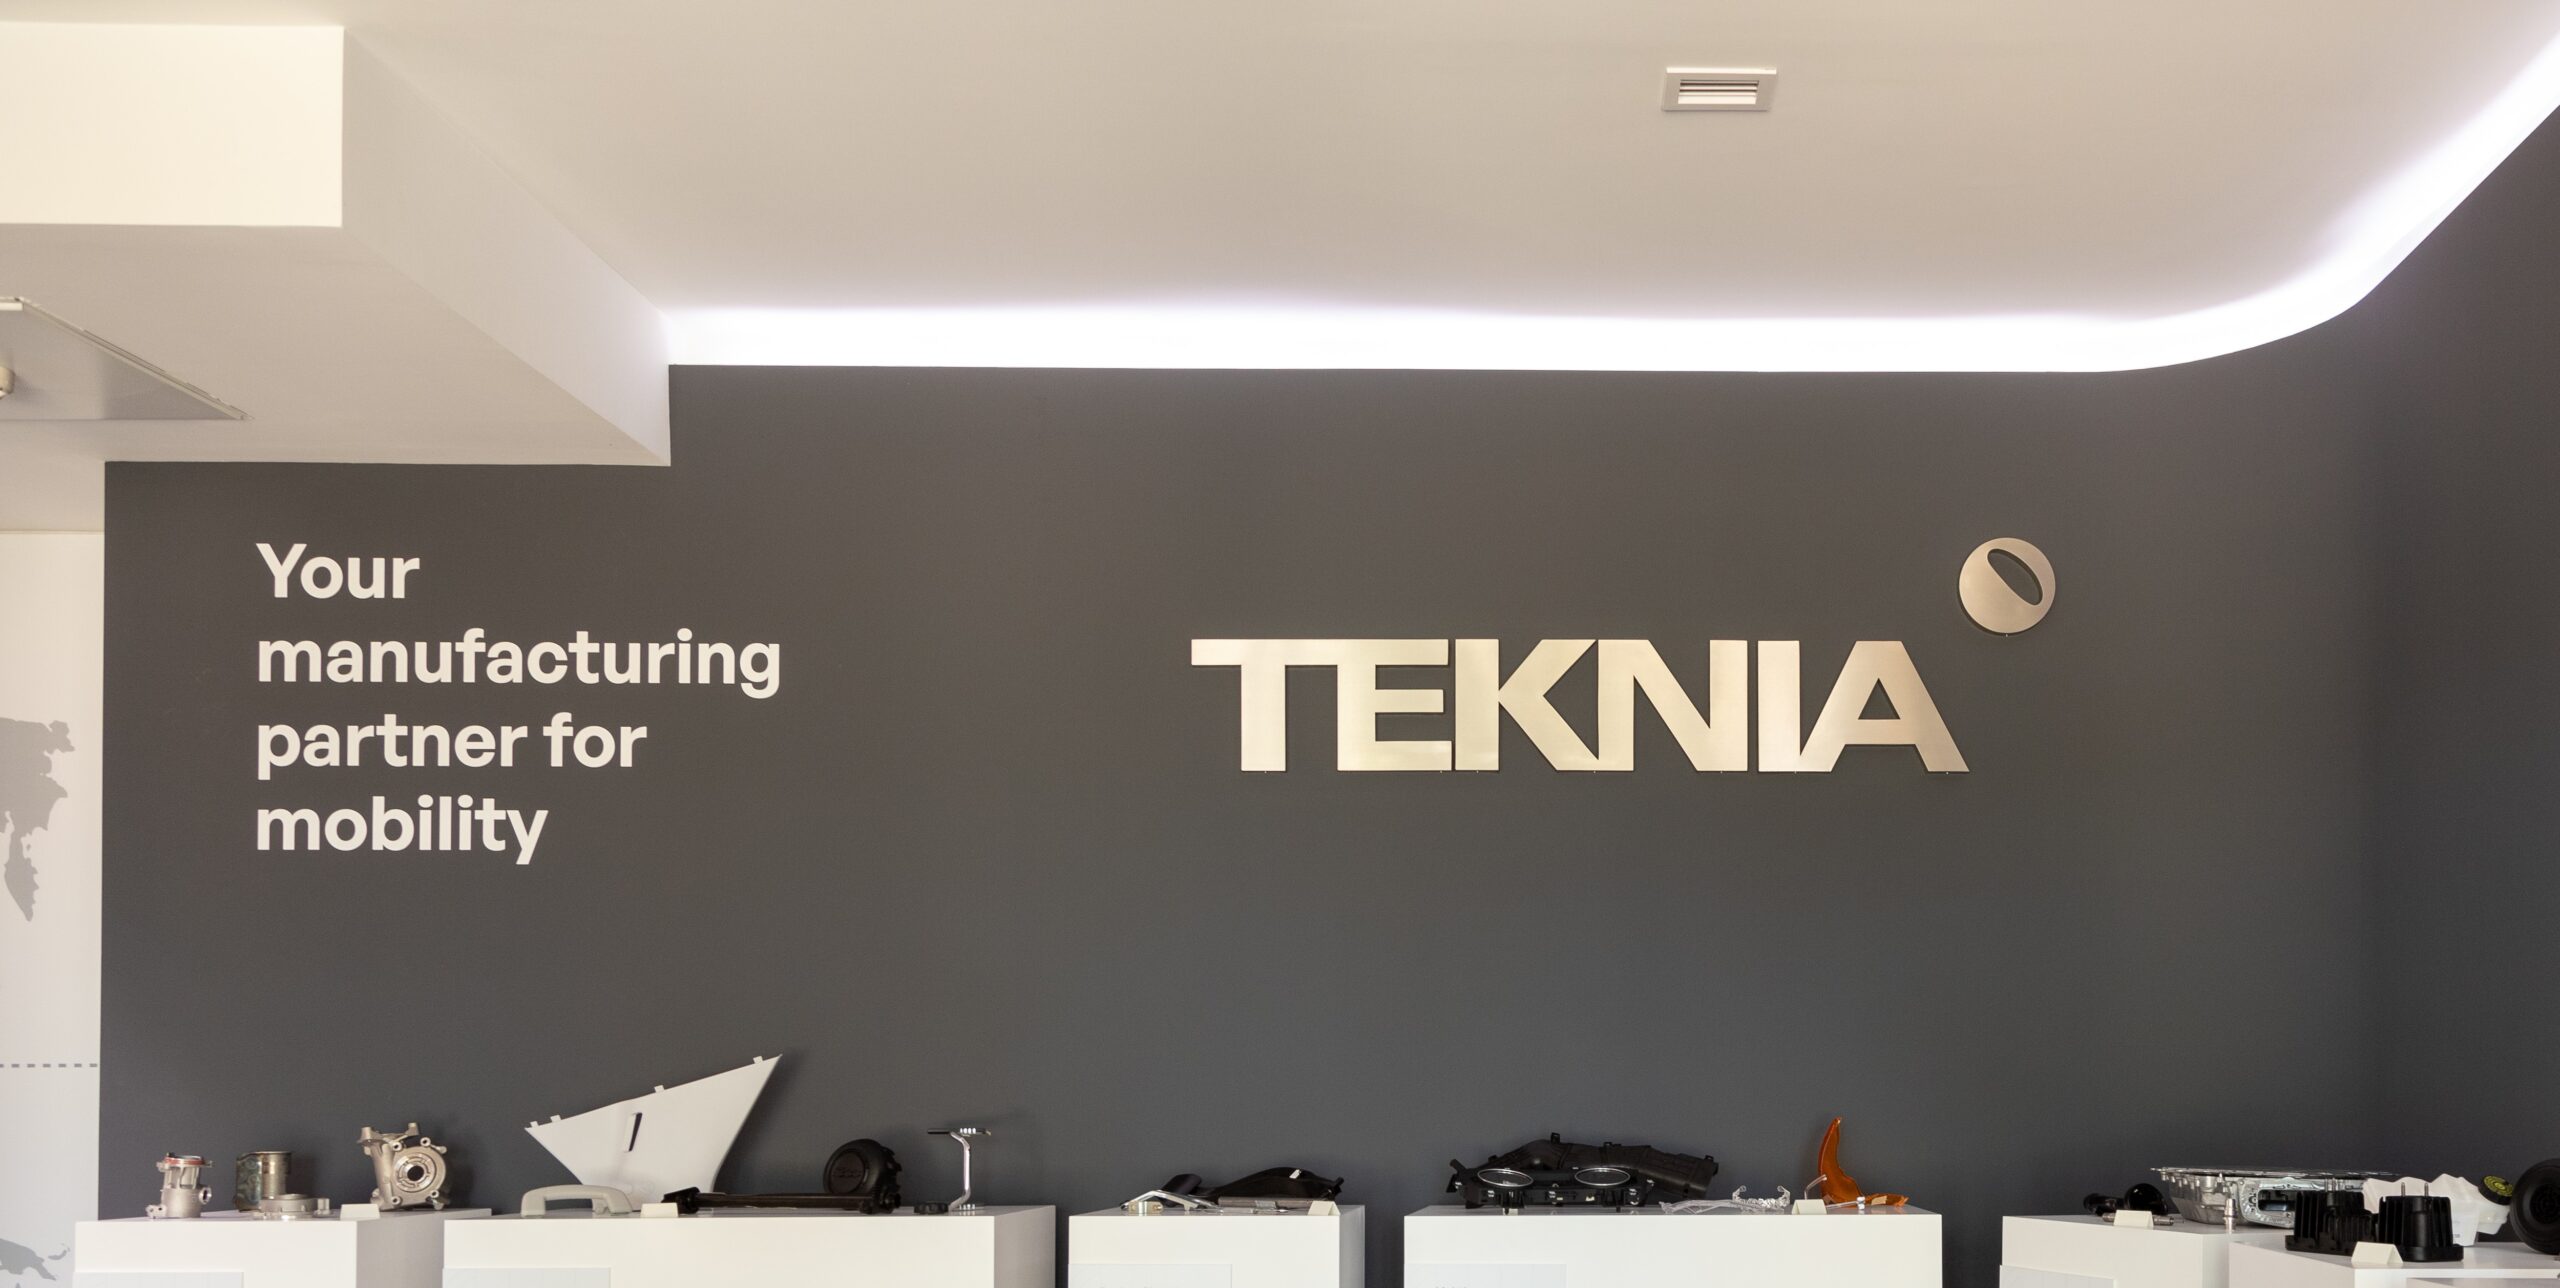 Teknia's headquarters showroom